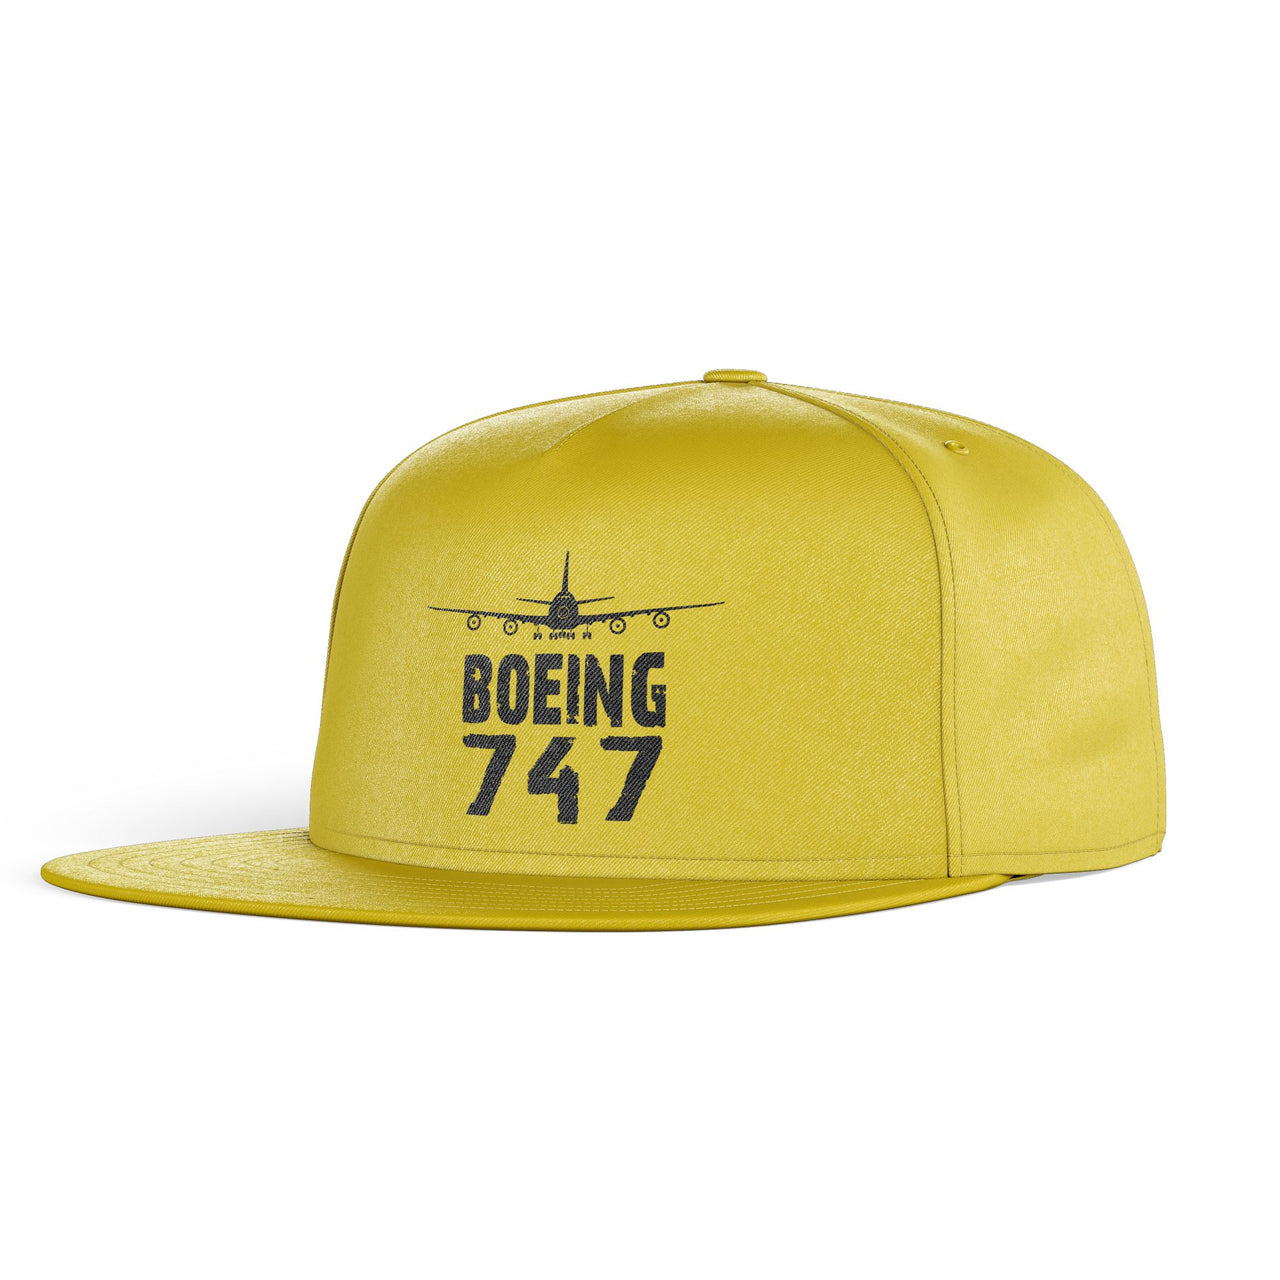 Boeing 747 & Plane Designed Snapback Caps & Hats